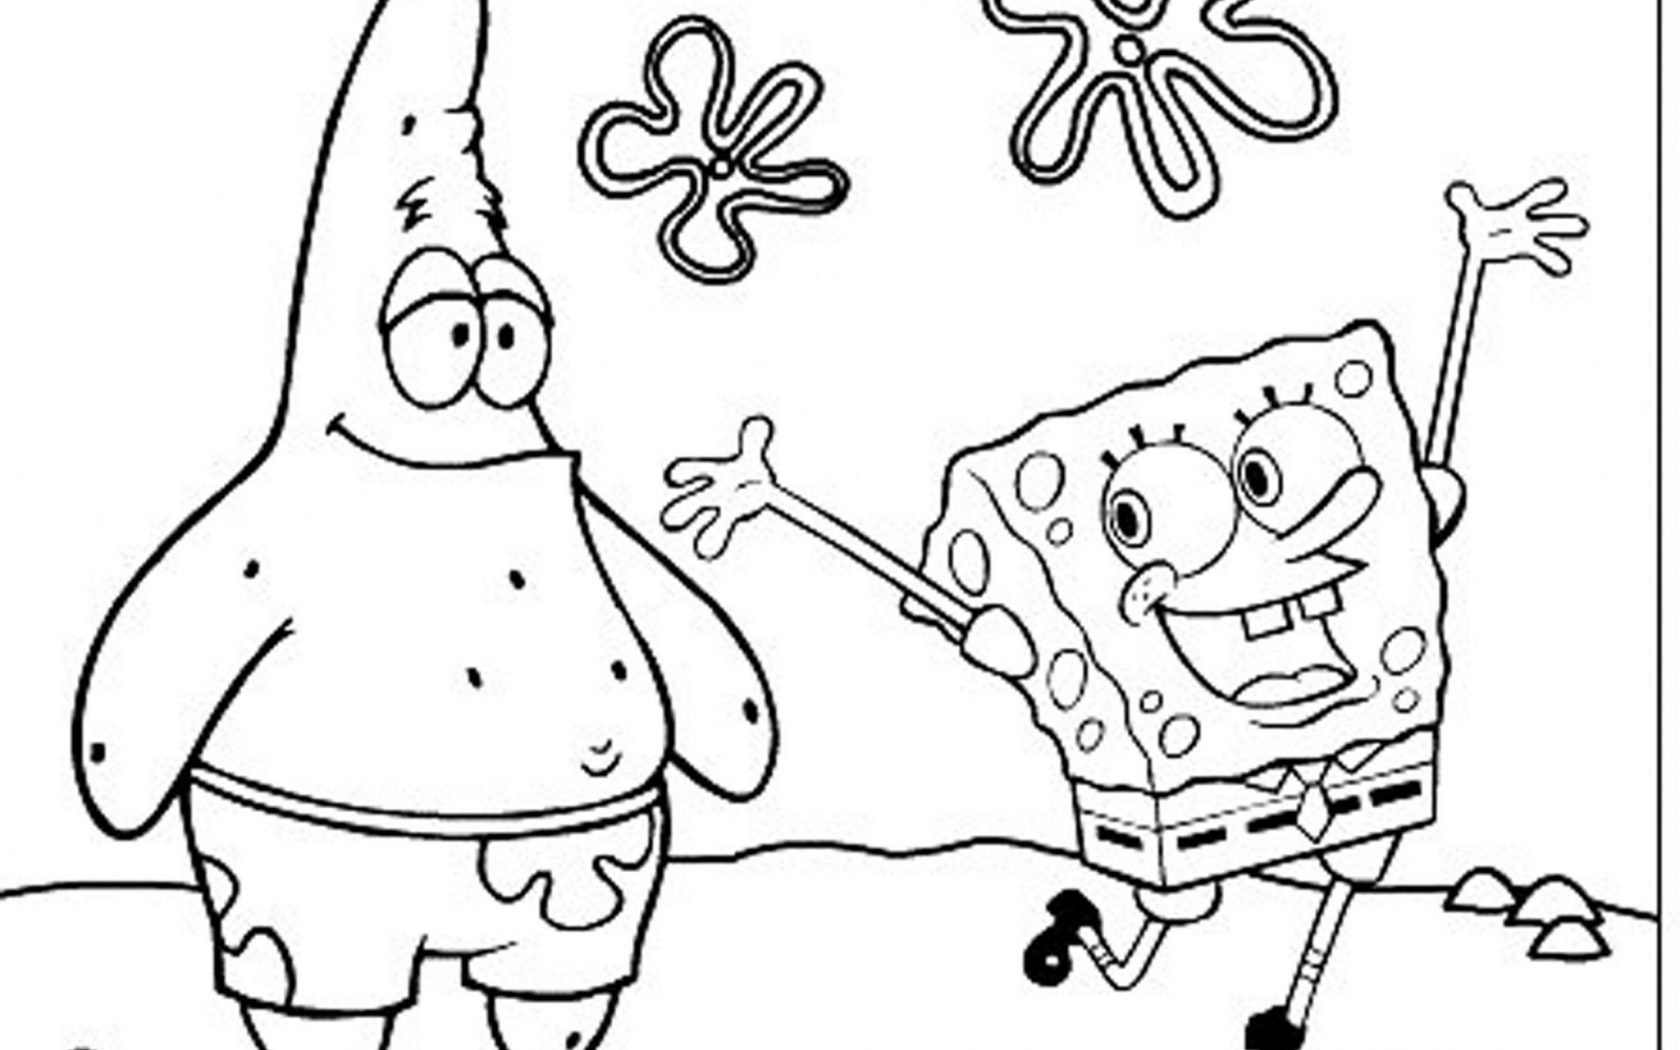 Spongebob Squarepants Coloring Pages Free Printable at ...